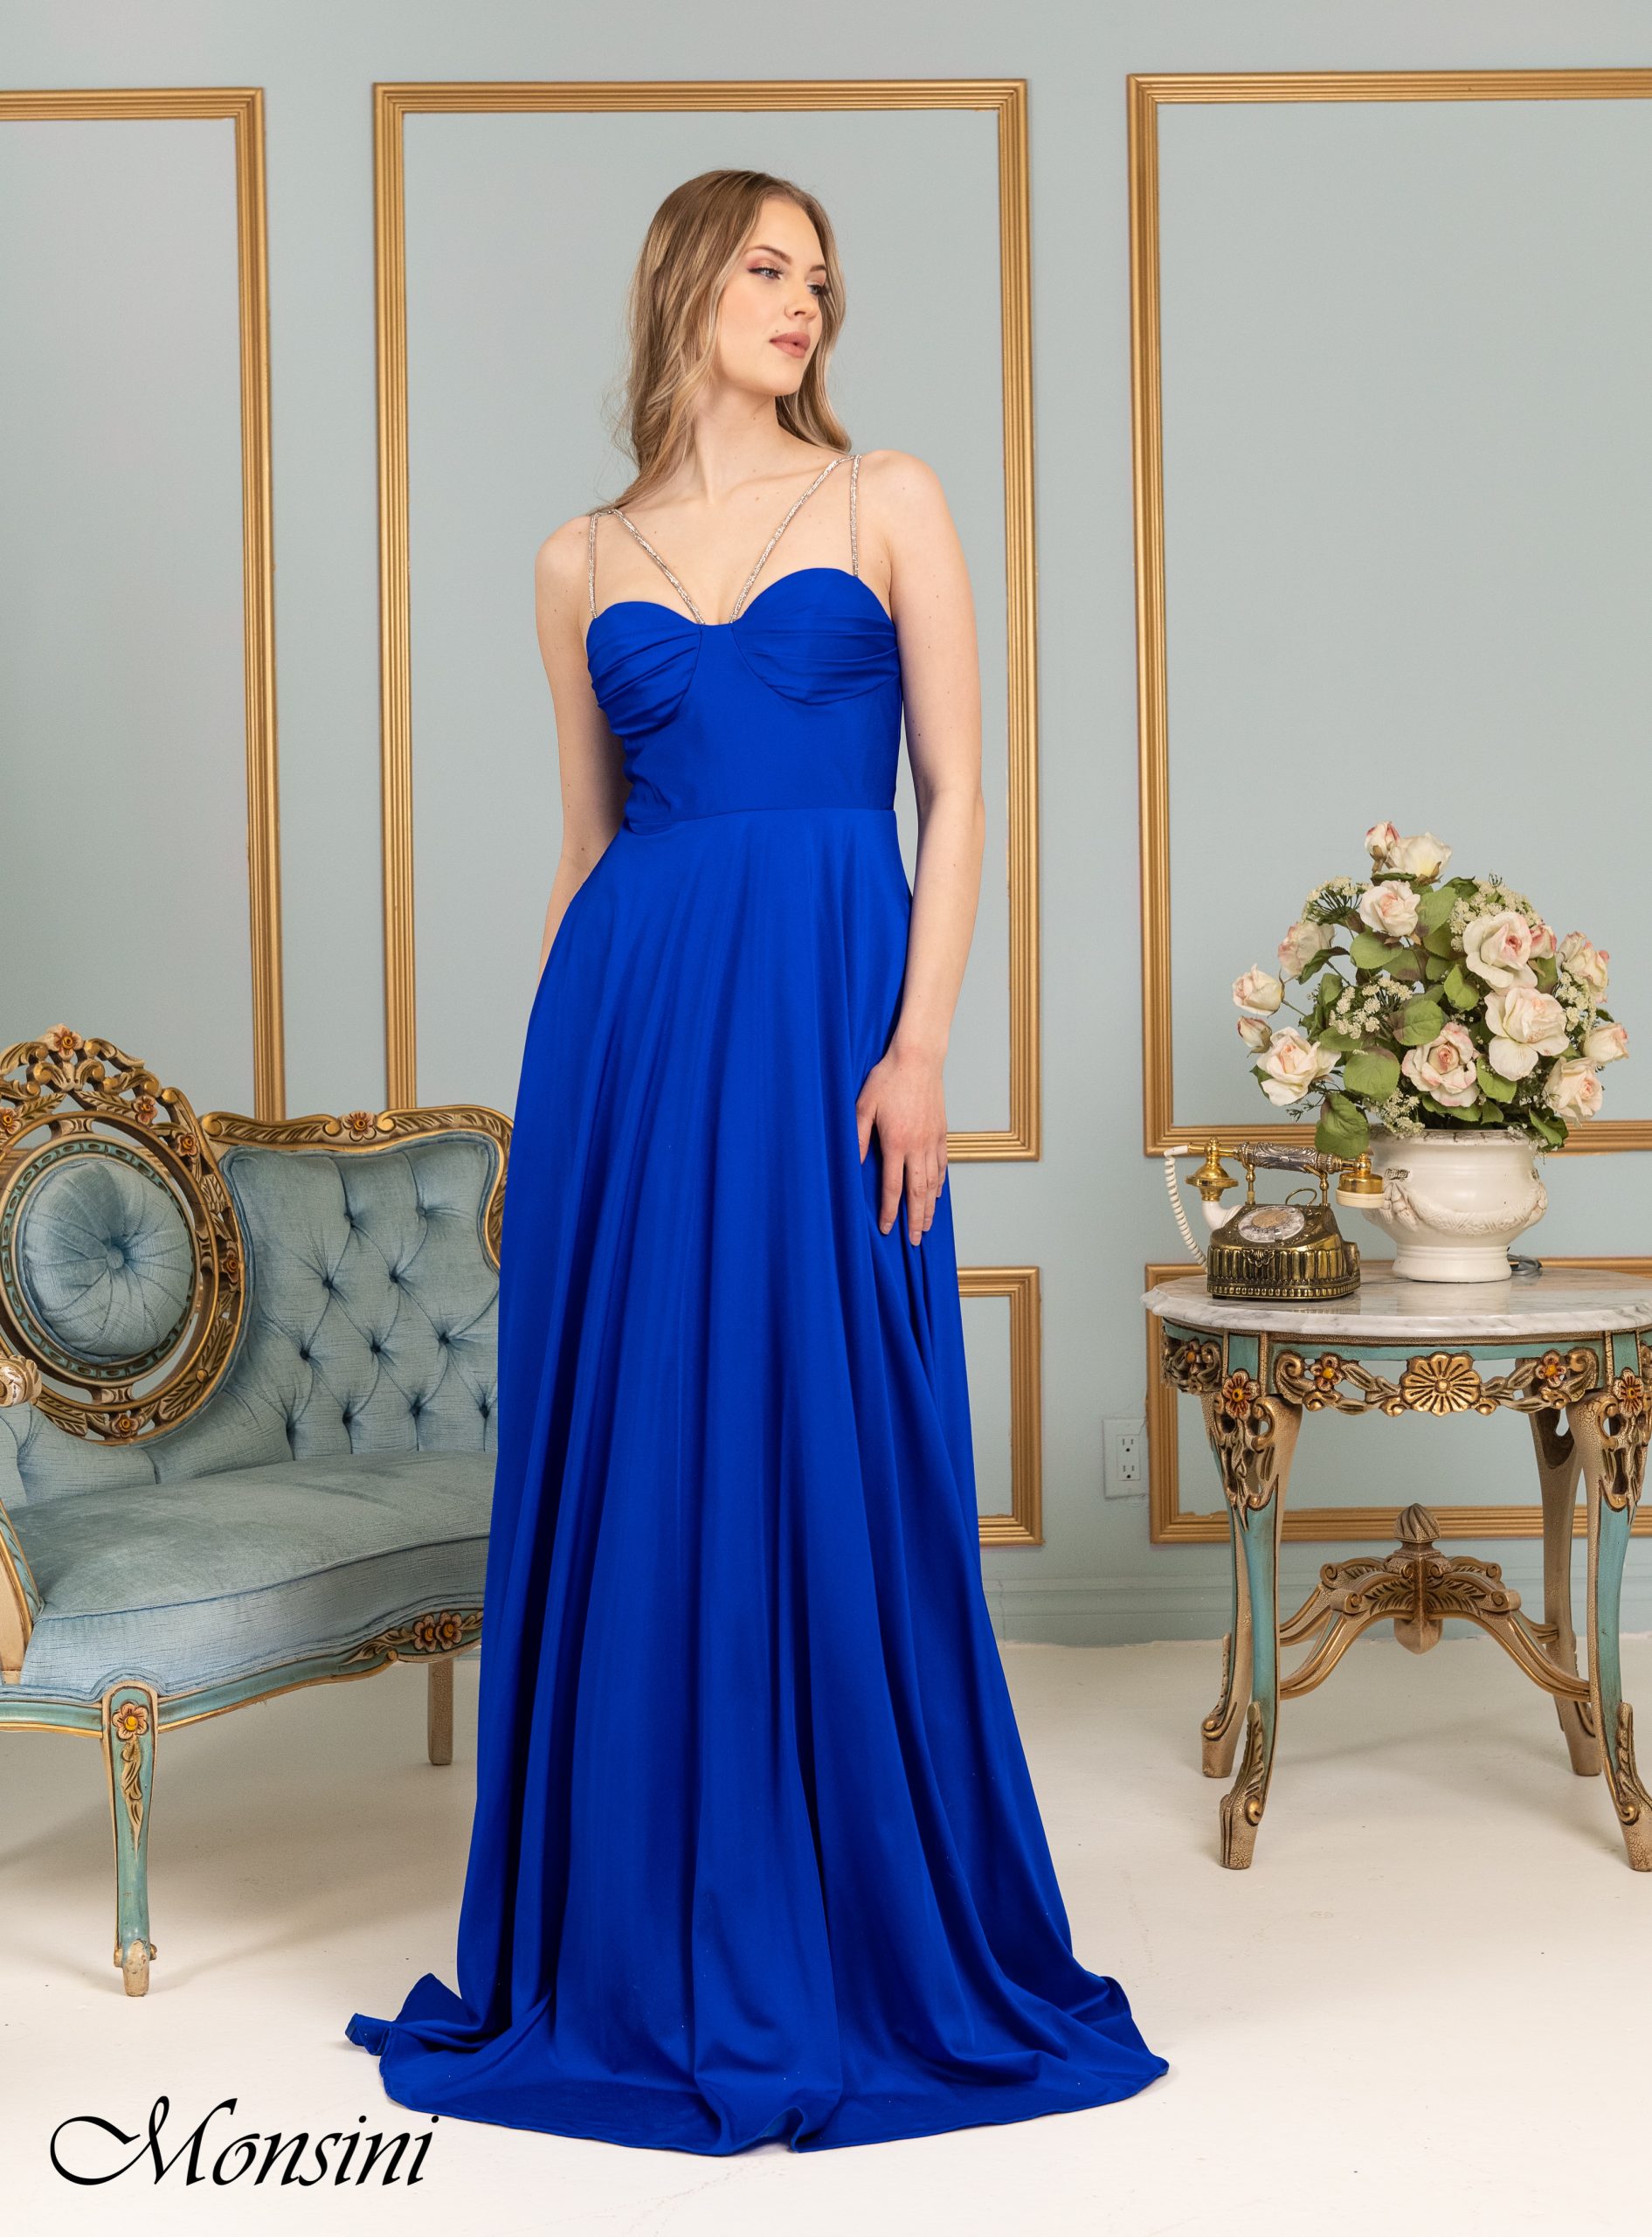 31909 - Monsini Prom Dresses available at Lisa's Bridal